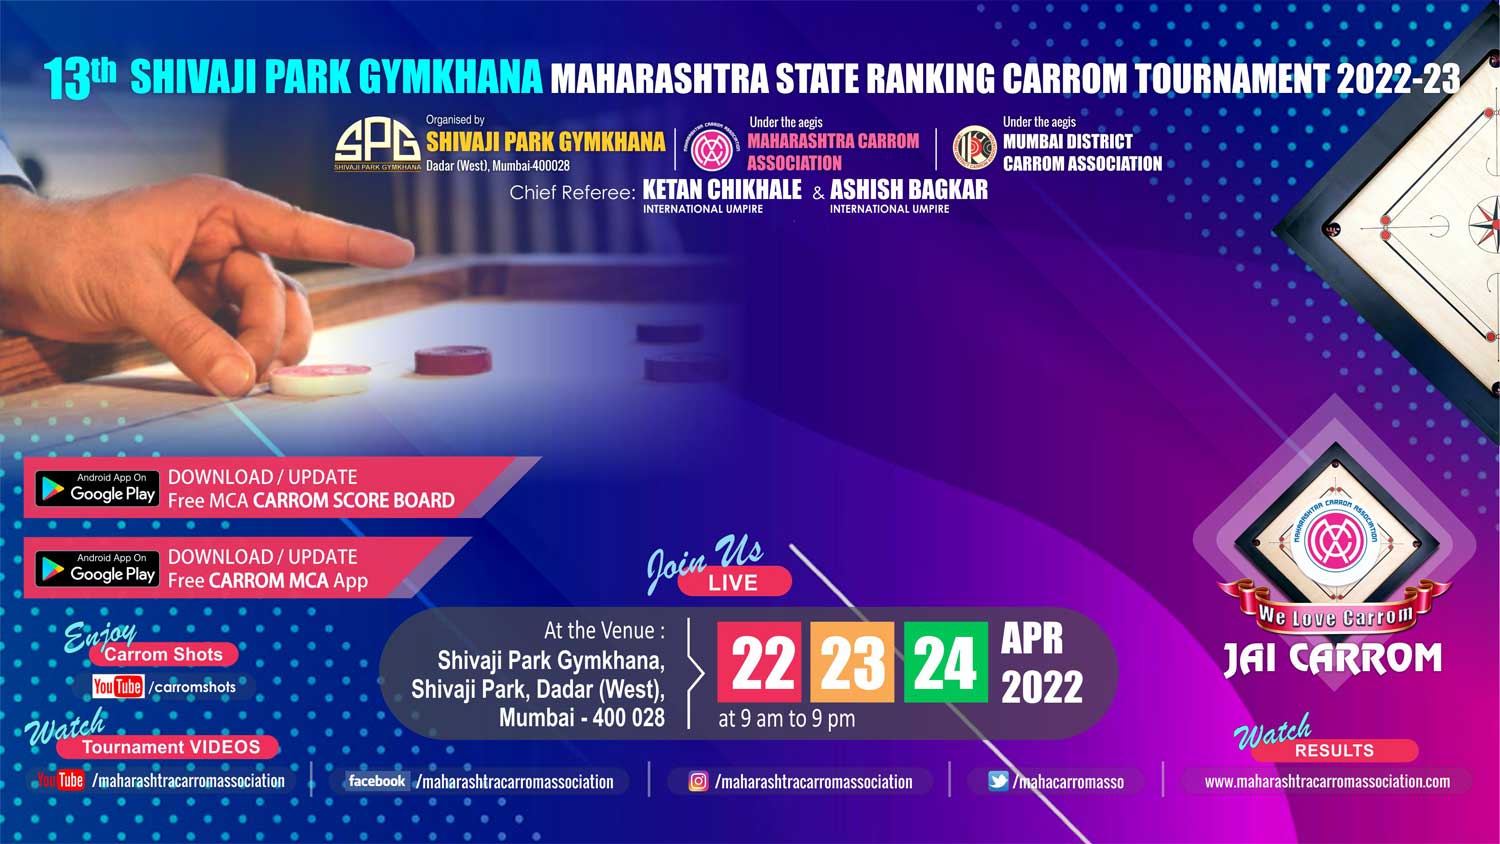 13th Shivaji Park Gymkhana State Ranking Carrom Tournament 2022-23